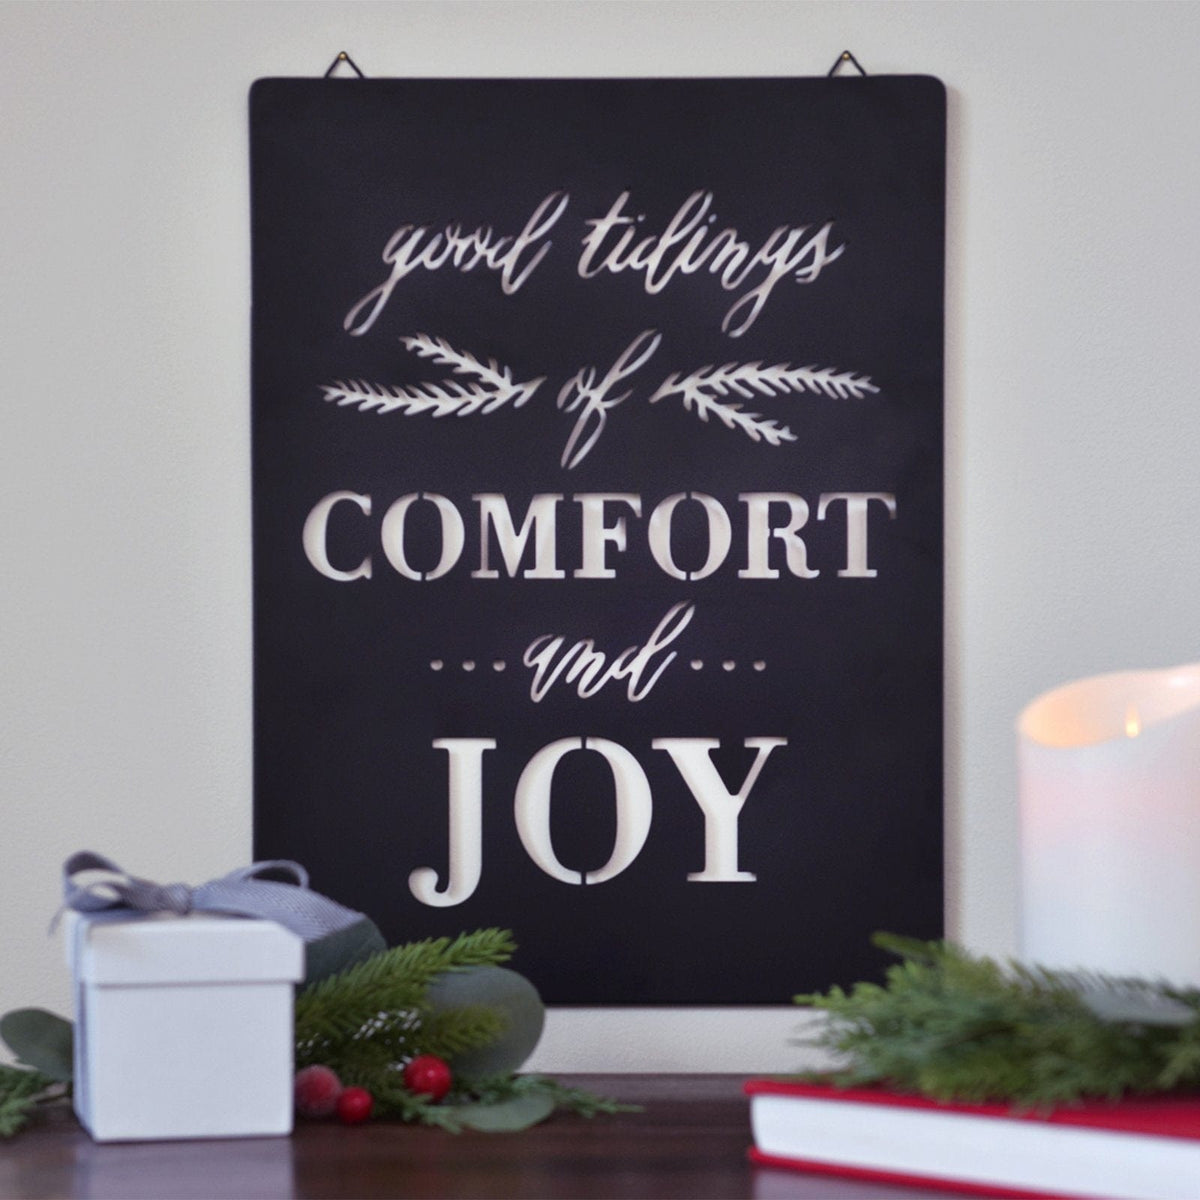 Comfort and Joy Sign Gartner Studios Sign 45468